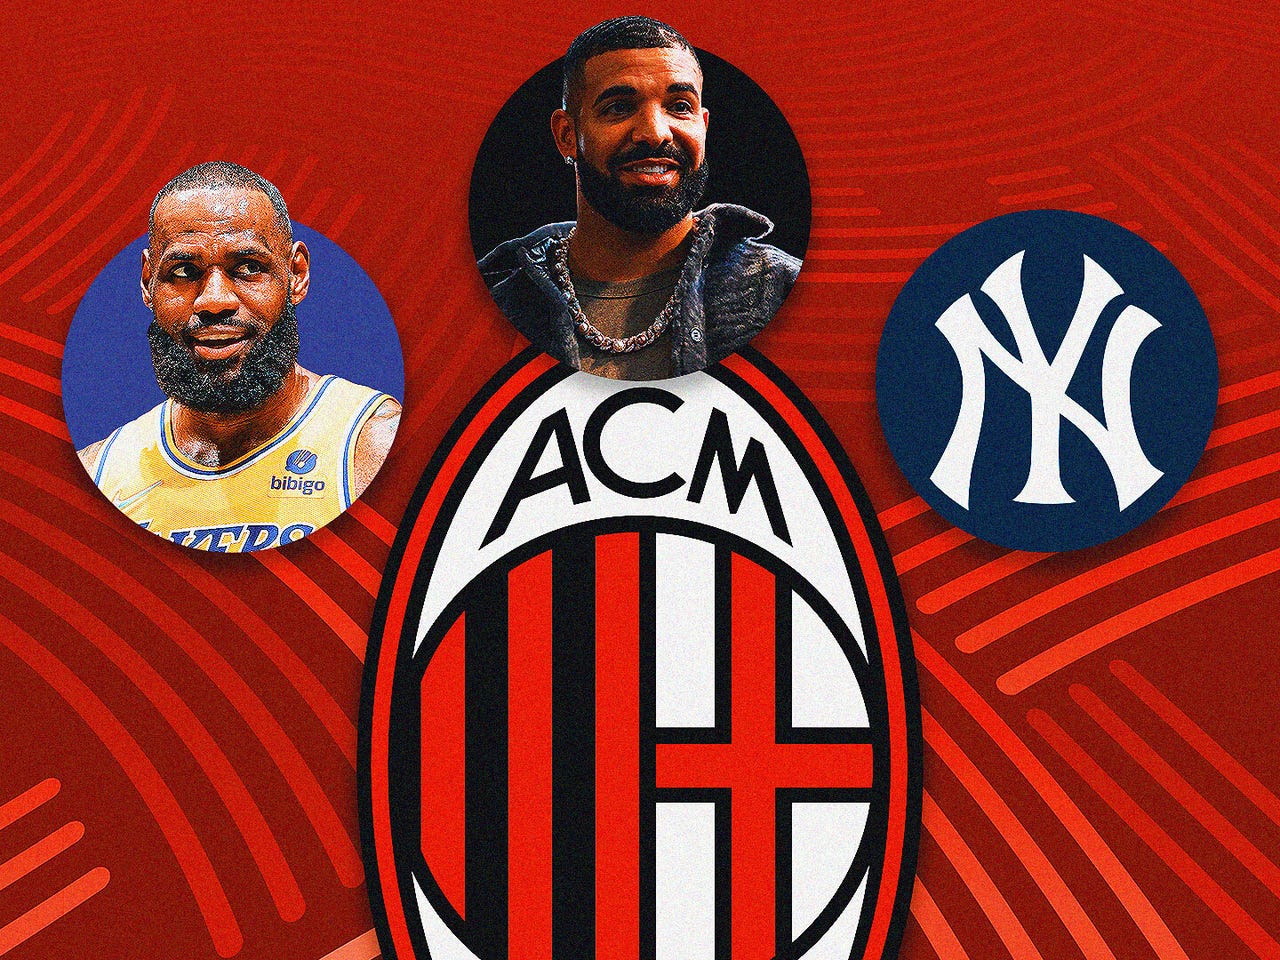 NY Yankees buy minority stake in AC Milan soccer club